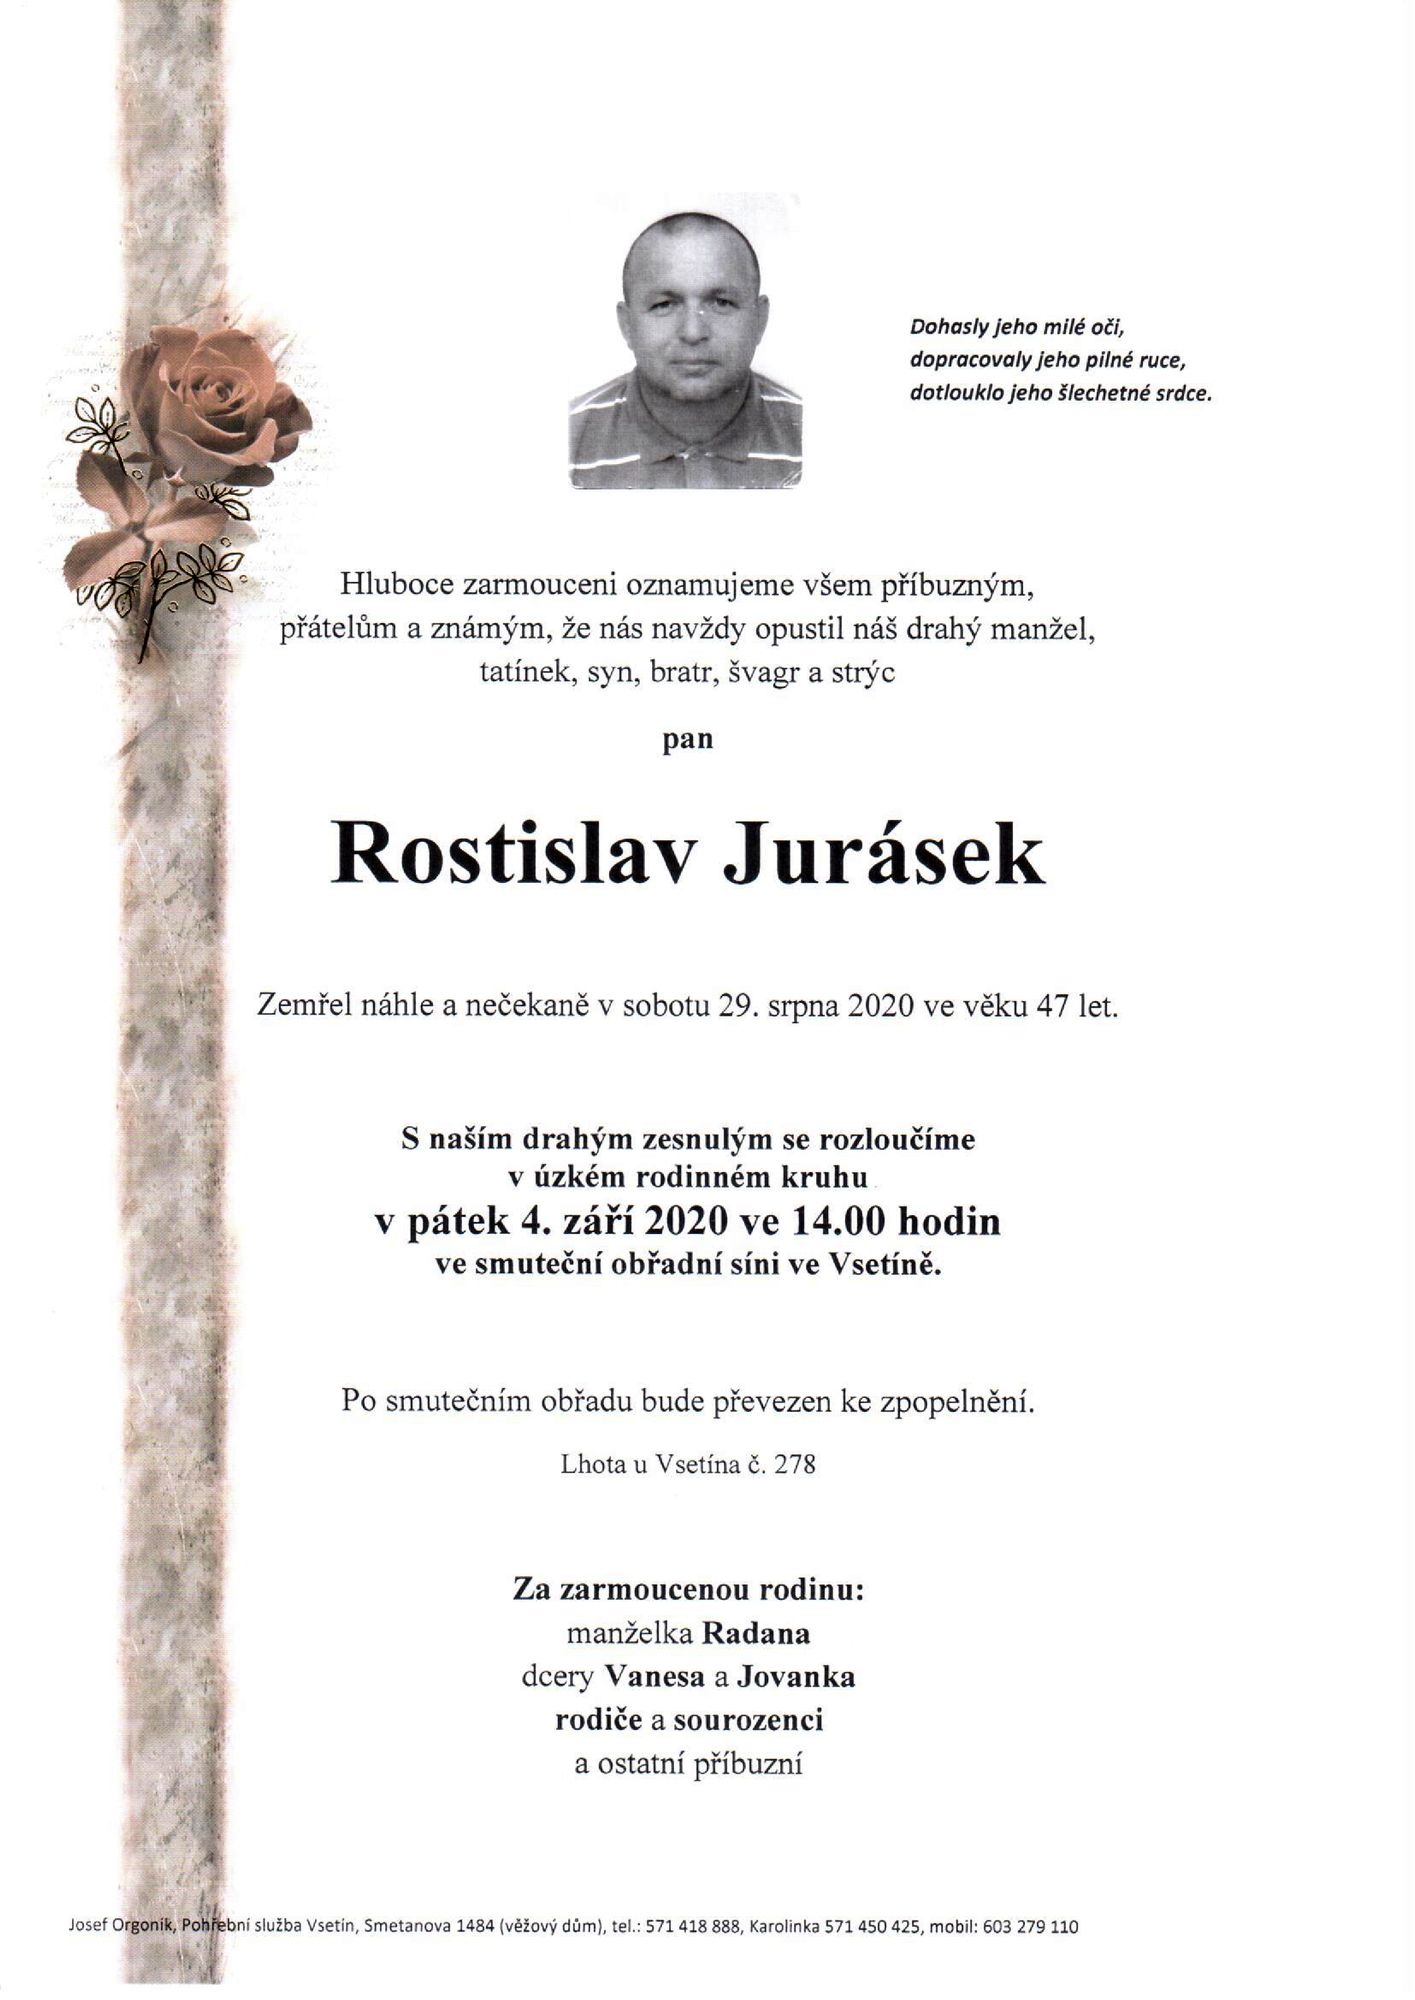 Rostislav Jurásek